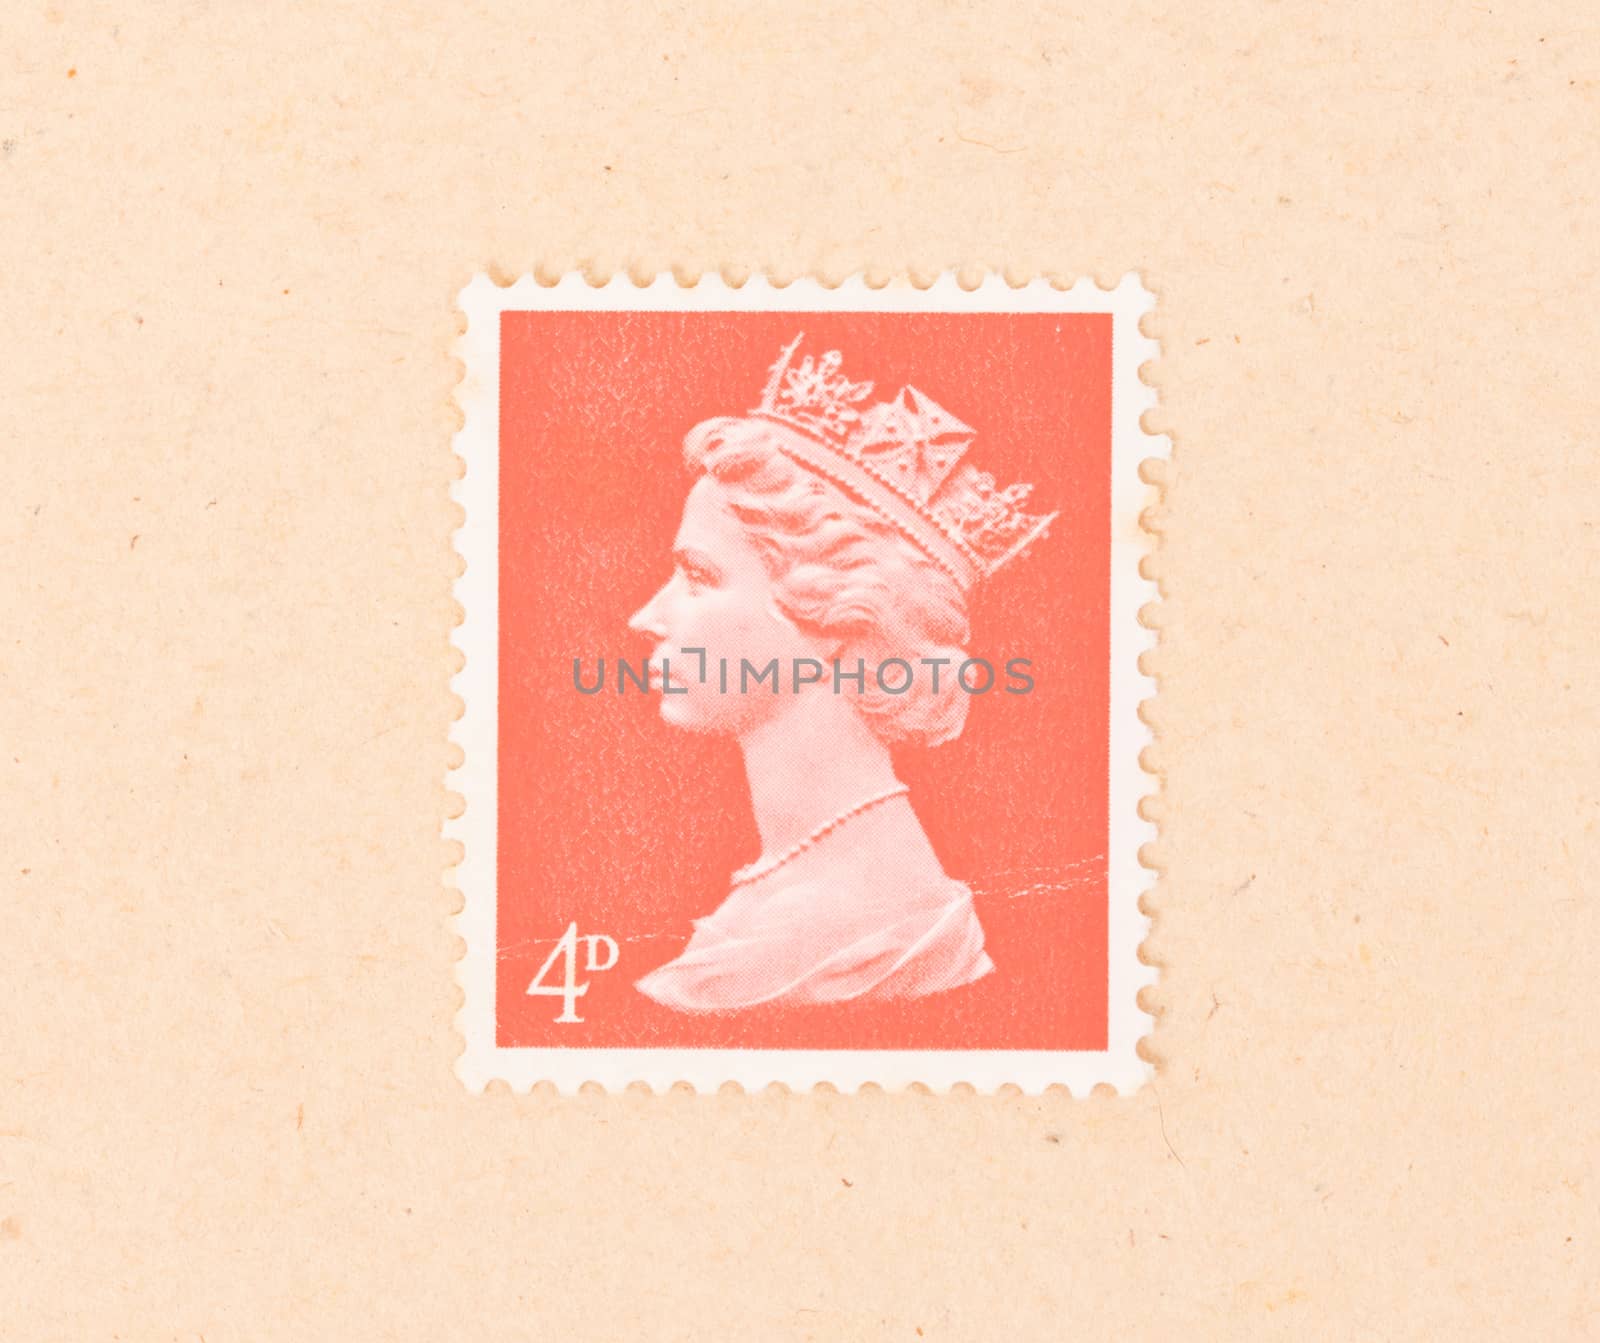 UNITED KINGDOM - CIRCA 1960: A stamp printed in the United Kingdom shows queen Elizabeth, circa 1960